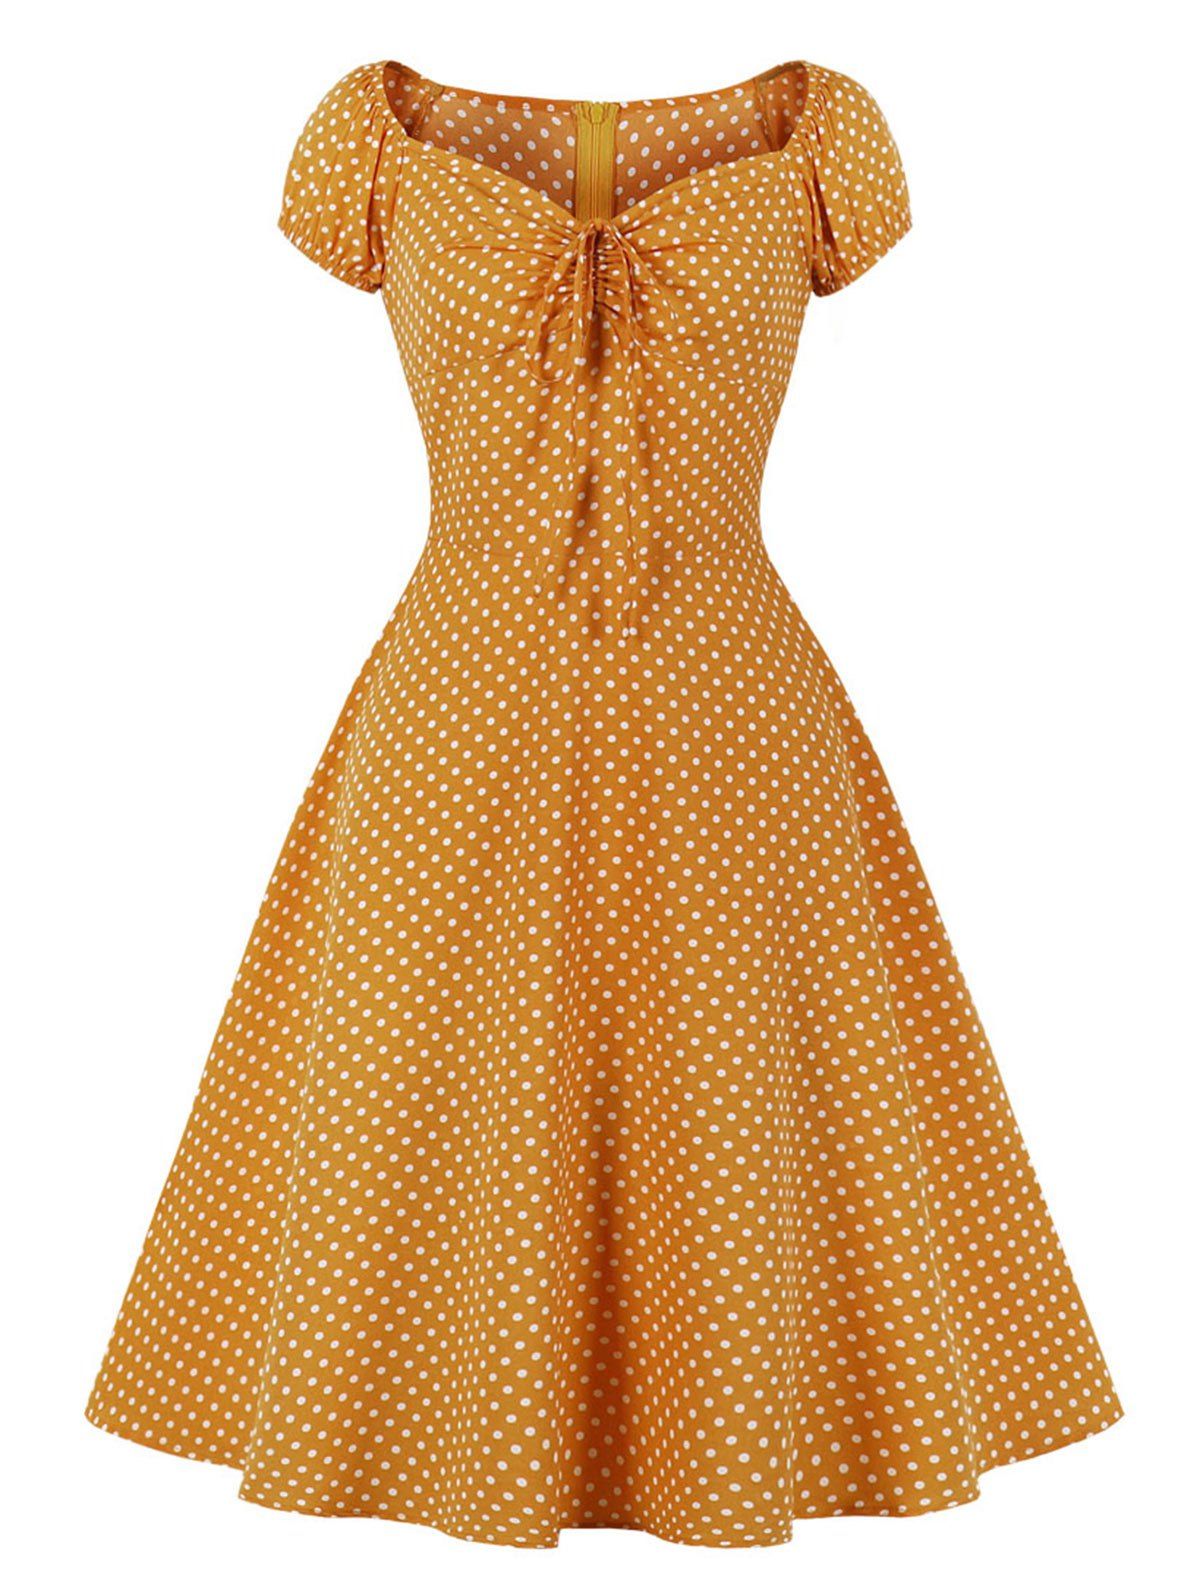 Polka Dot Cinched Dress - YELLOW M